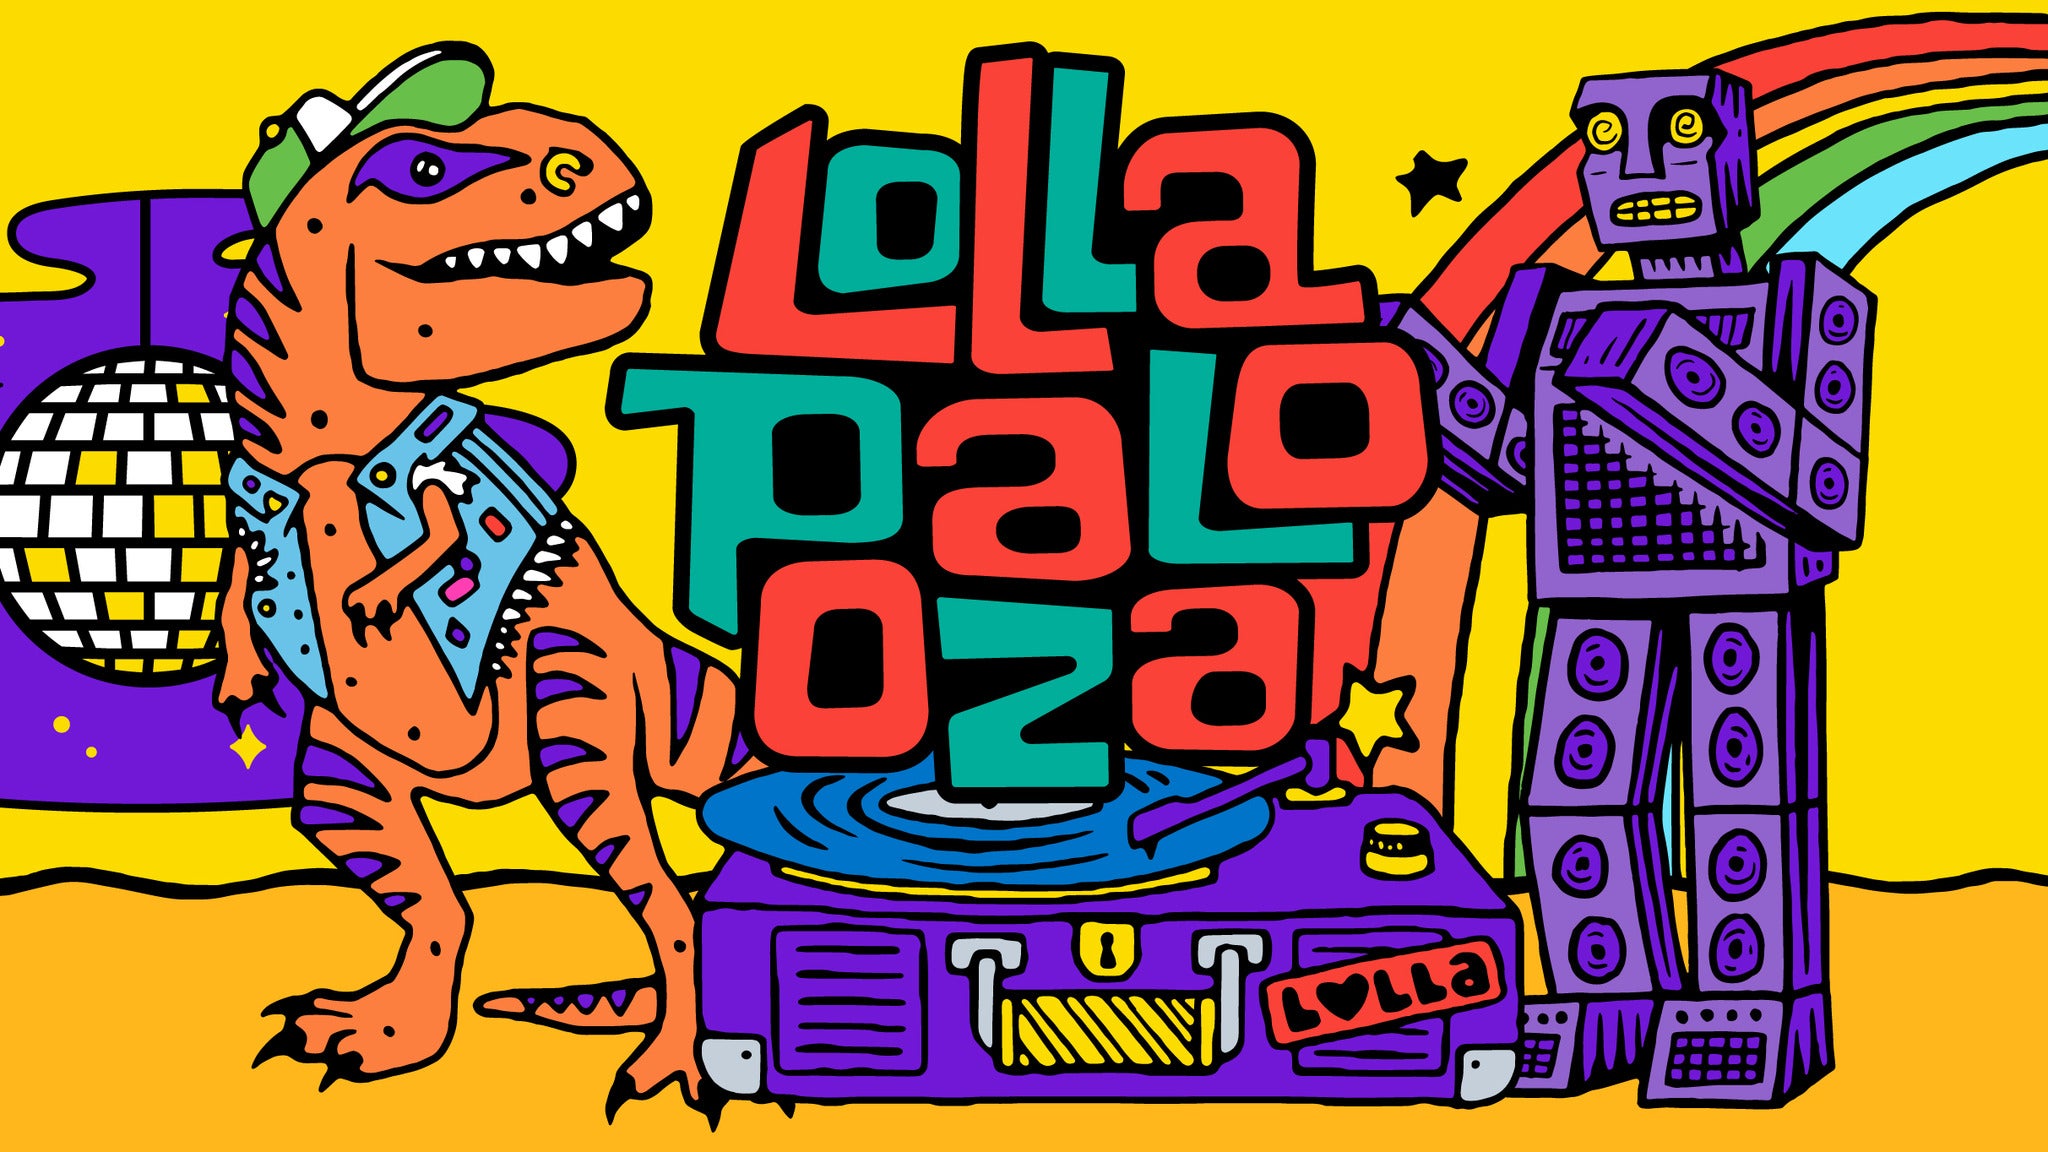 lollapalooza 96 tour dates